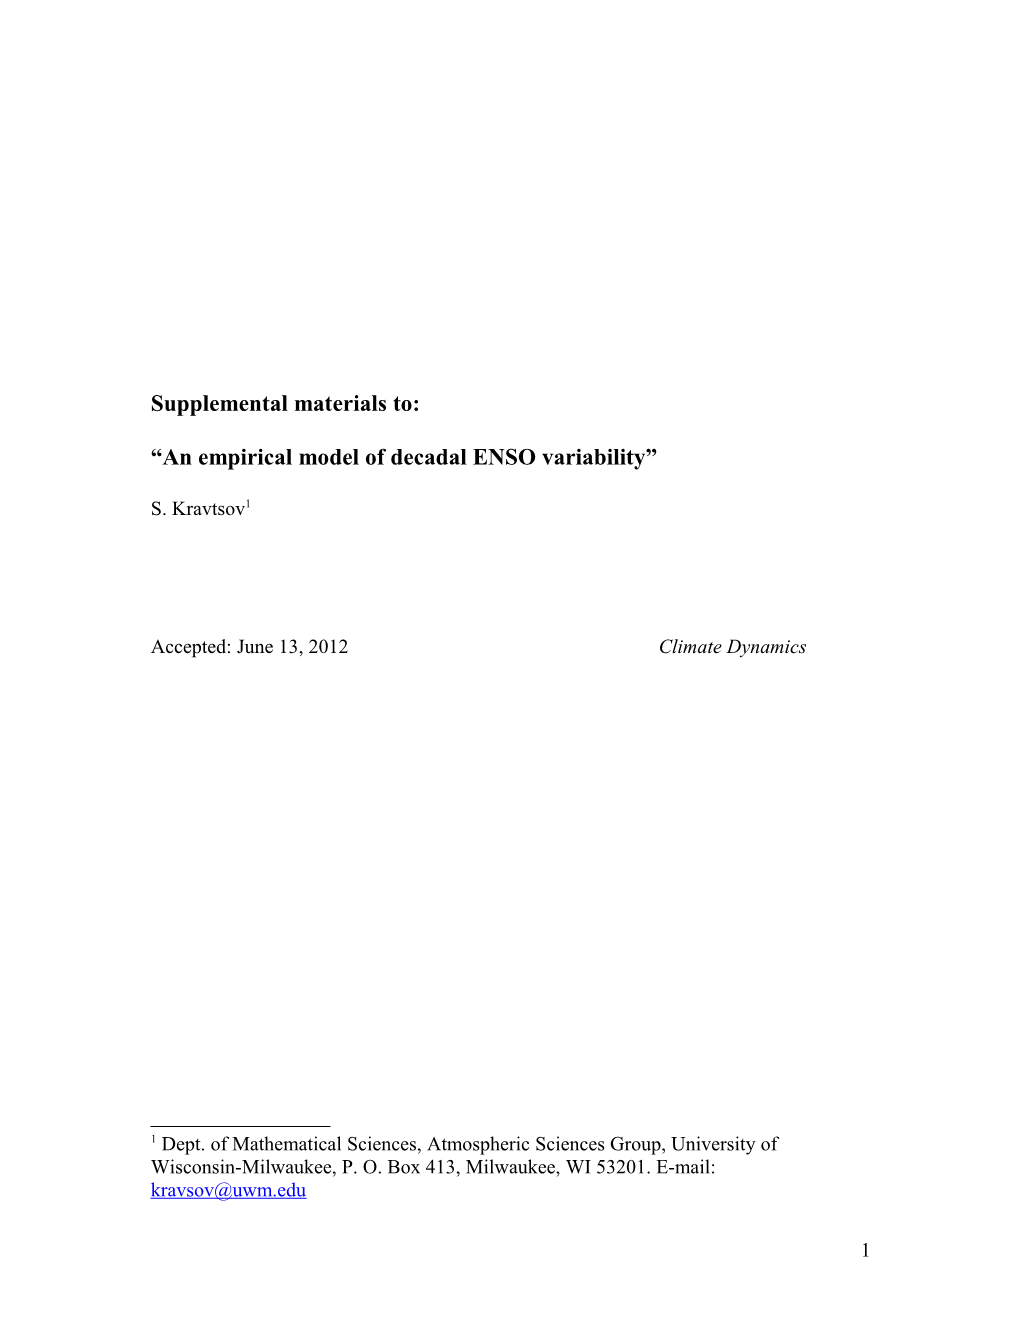 An Empirical Model of Decadal ENSO Variability